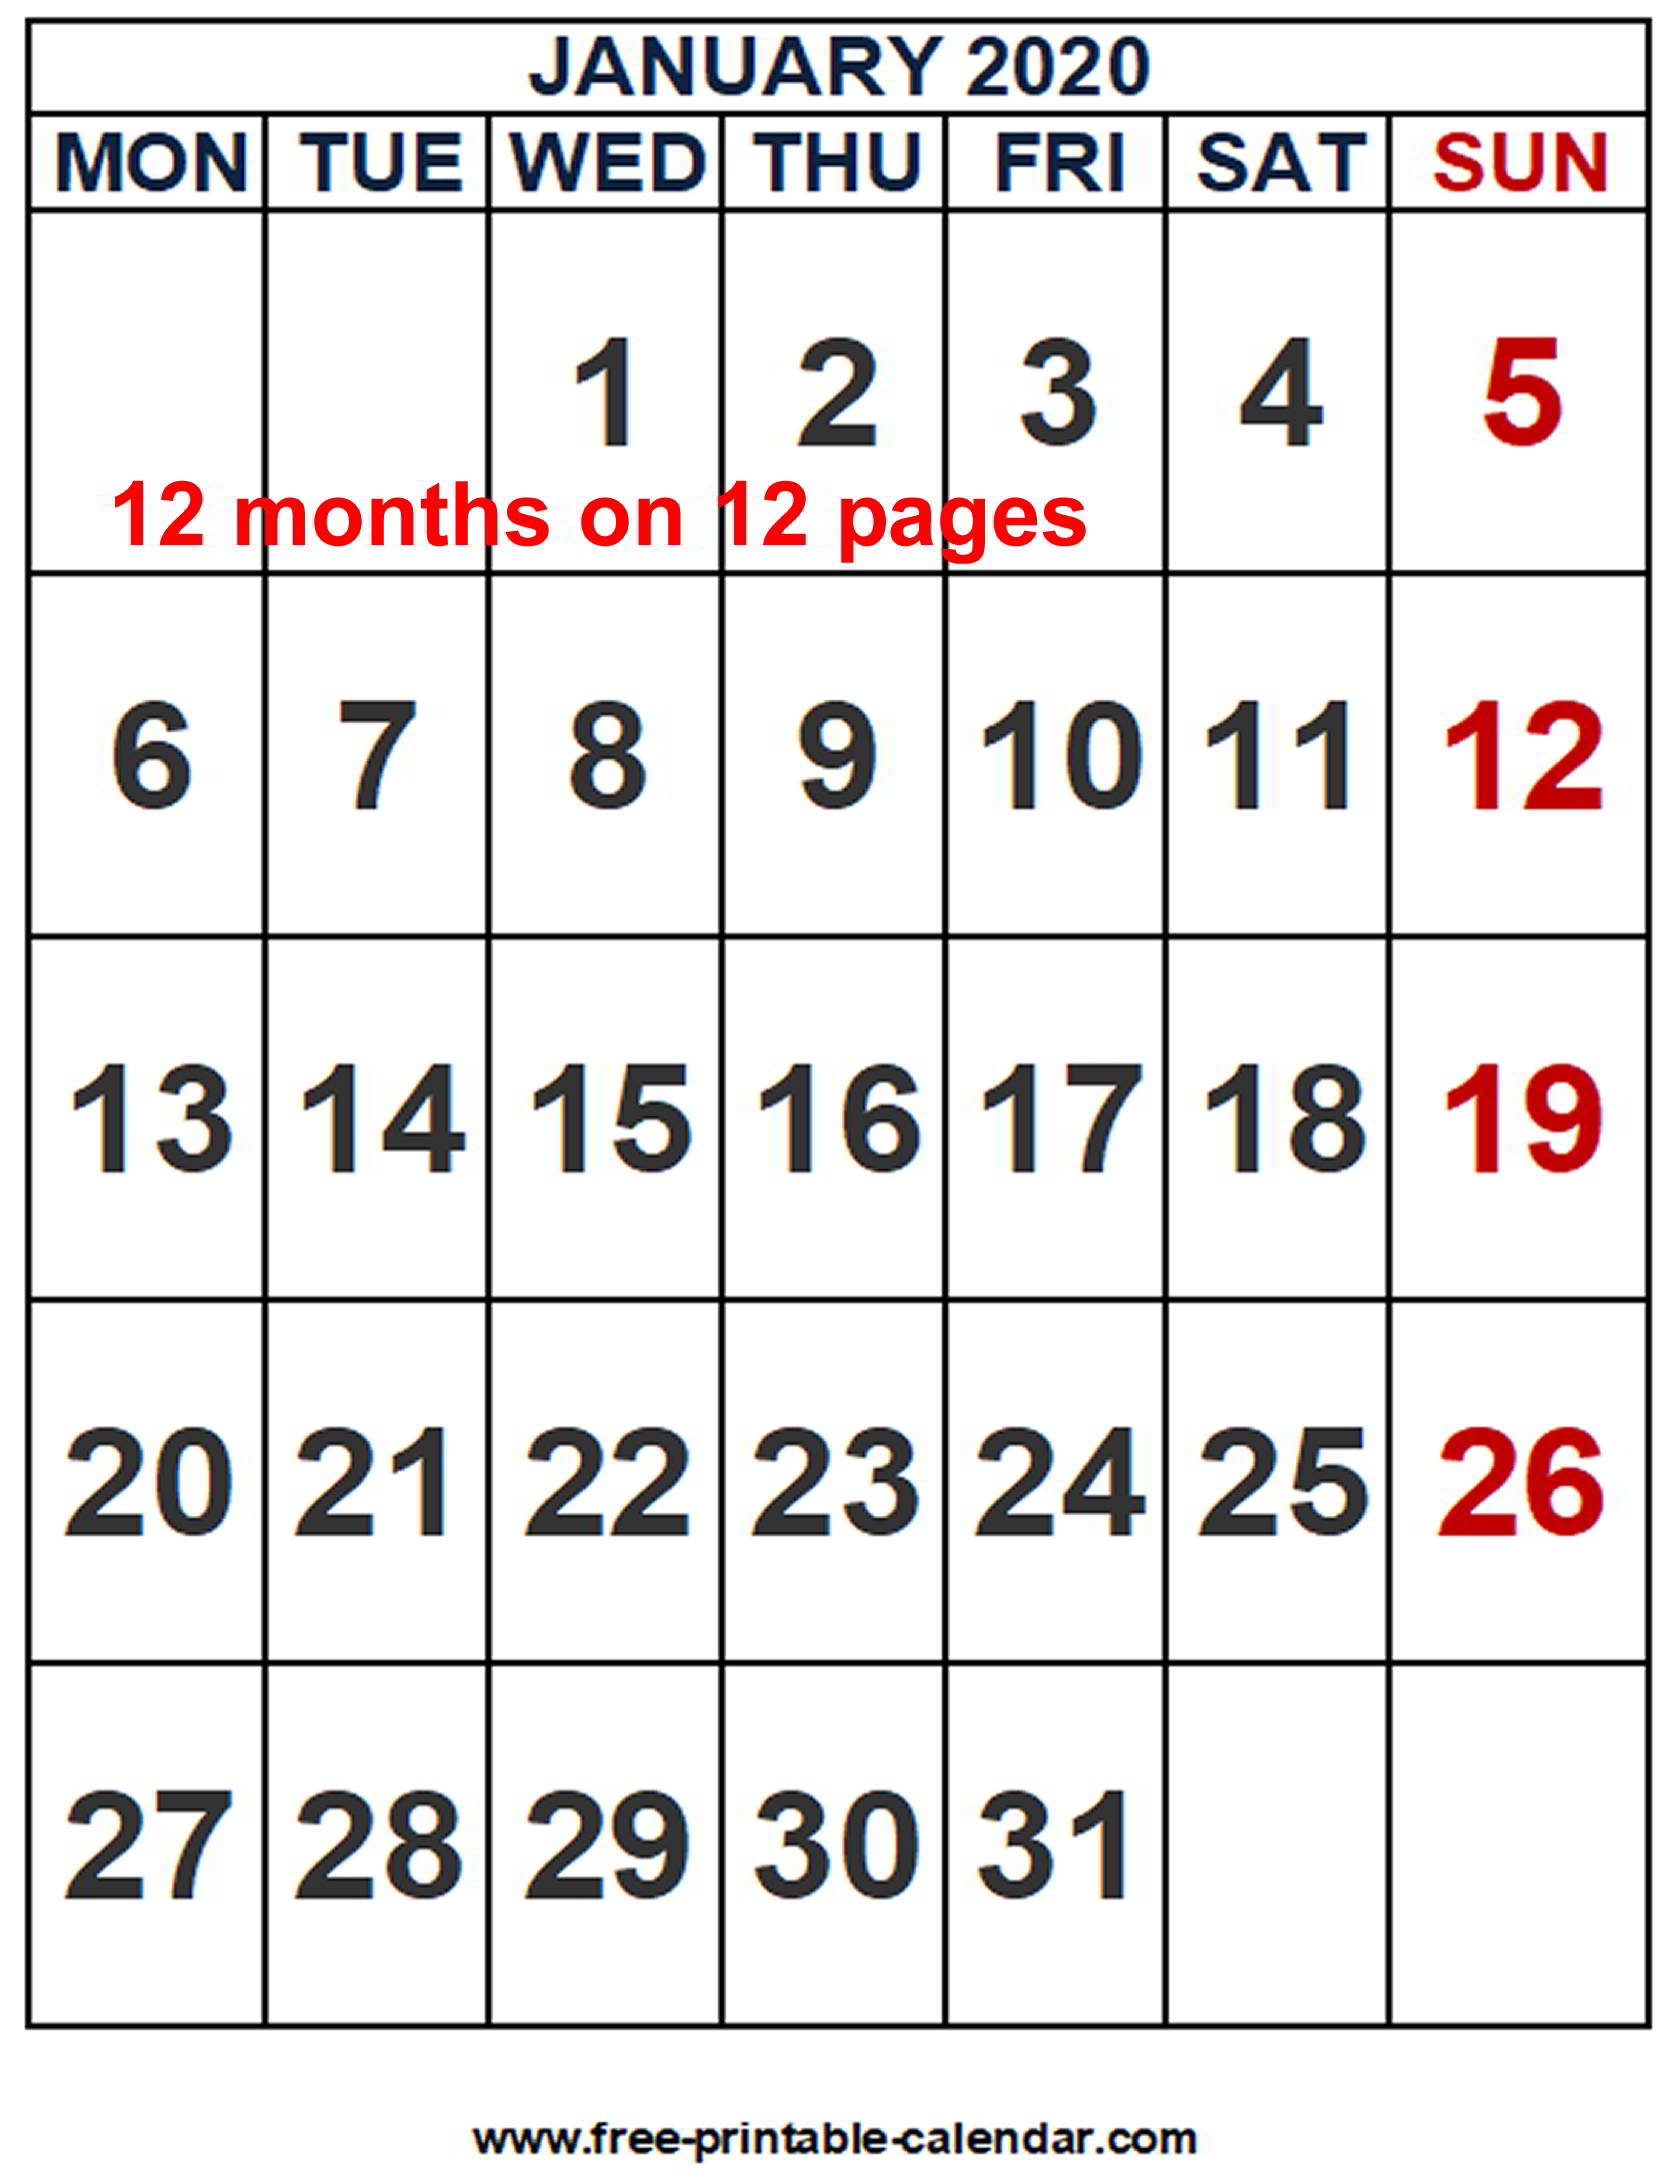 2020 Calendar Word Template - Free-Printable-Calendar